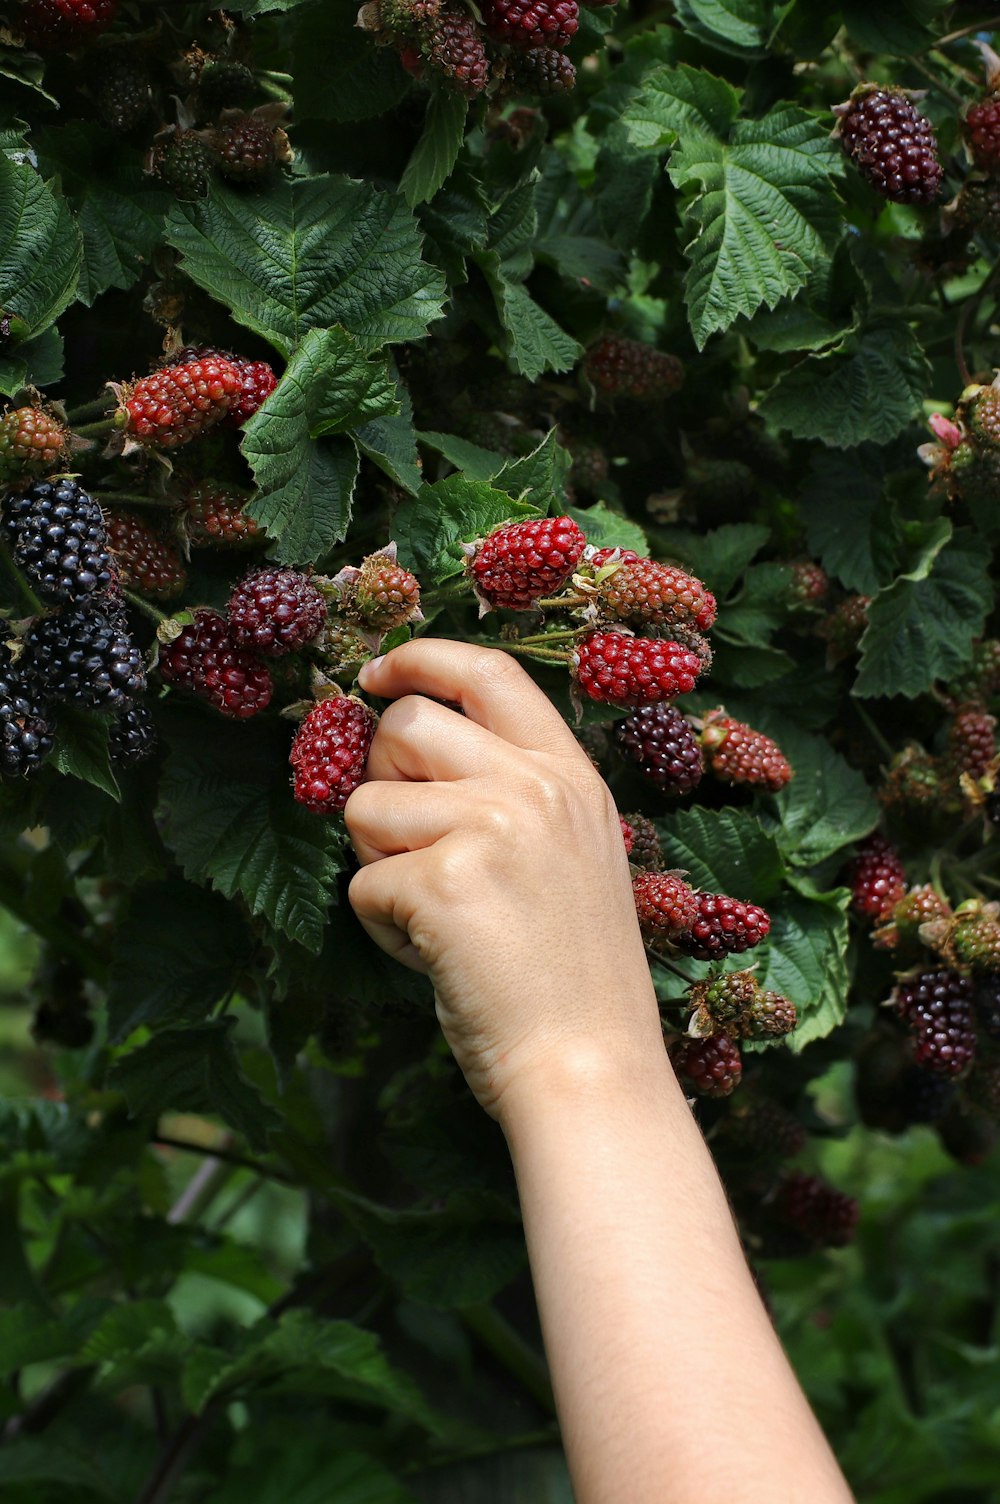 Berry picking. Blackberries!